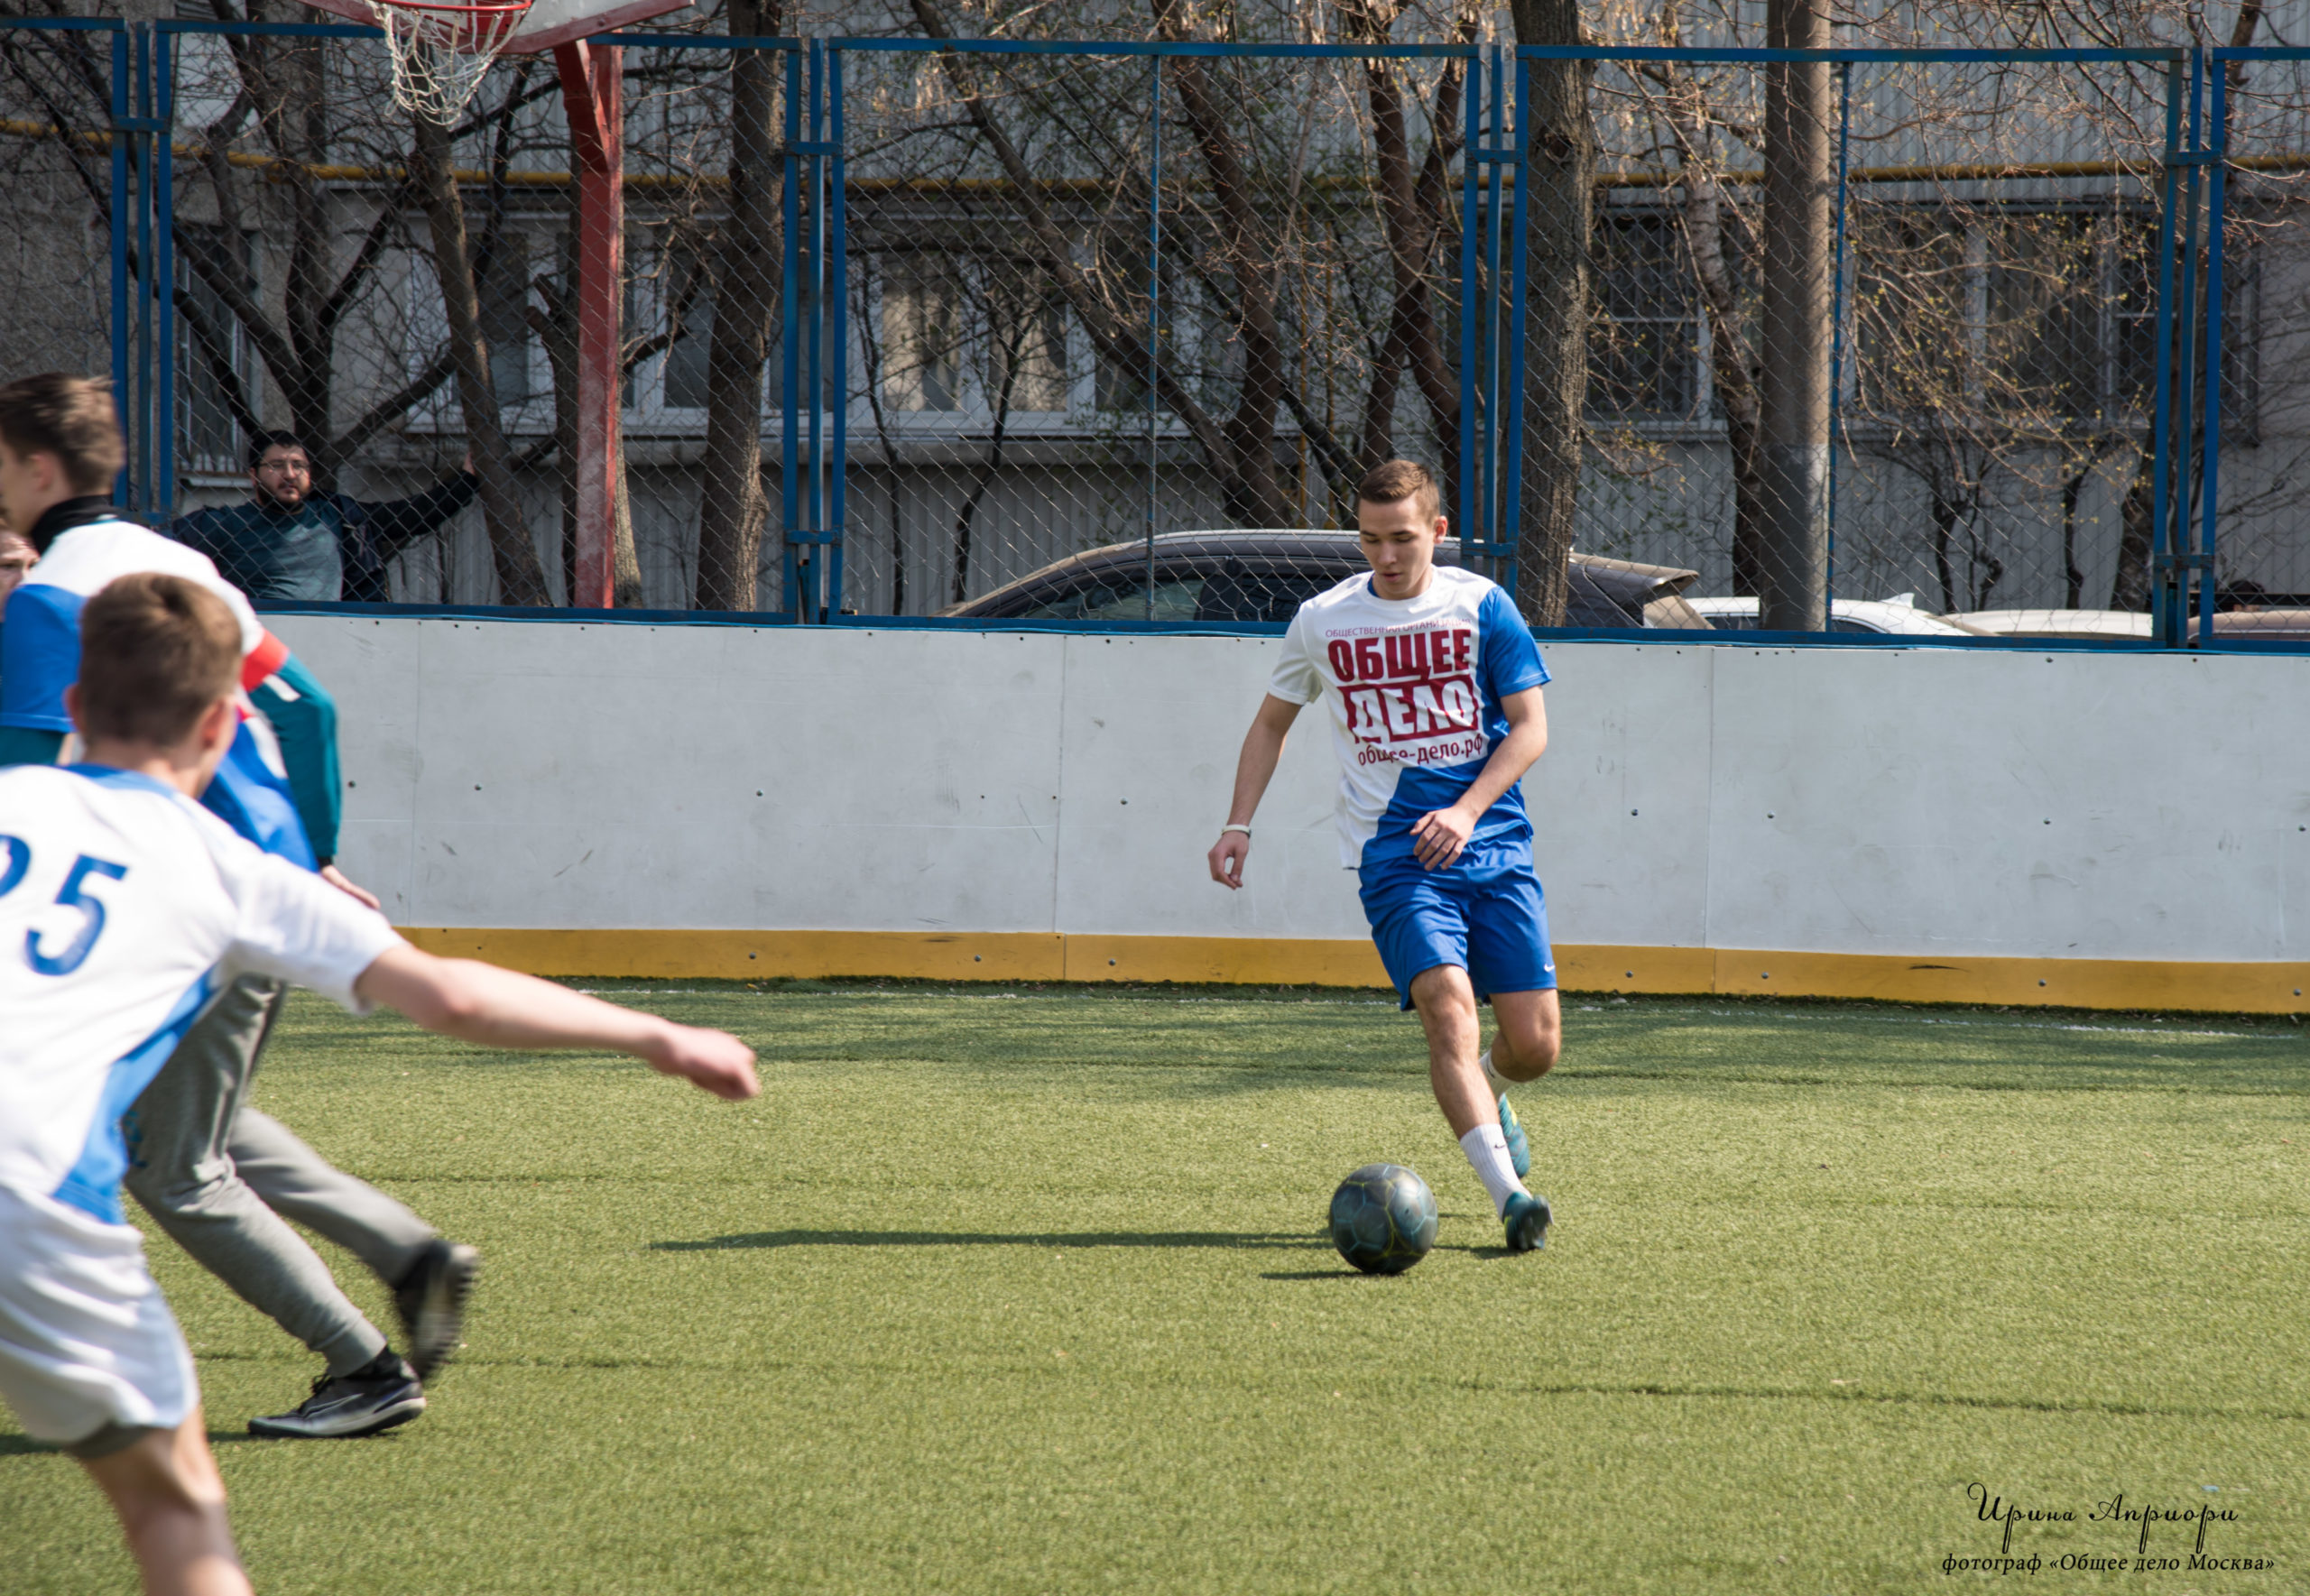 Команда “Общее дело” на турнире по мини-футболу в Москве